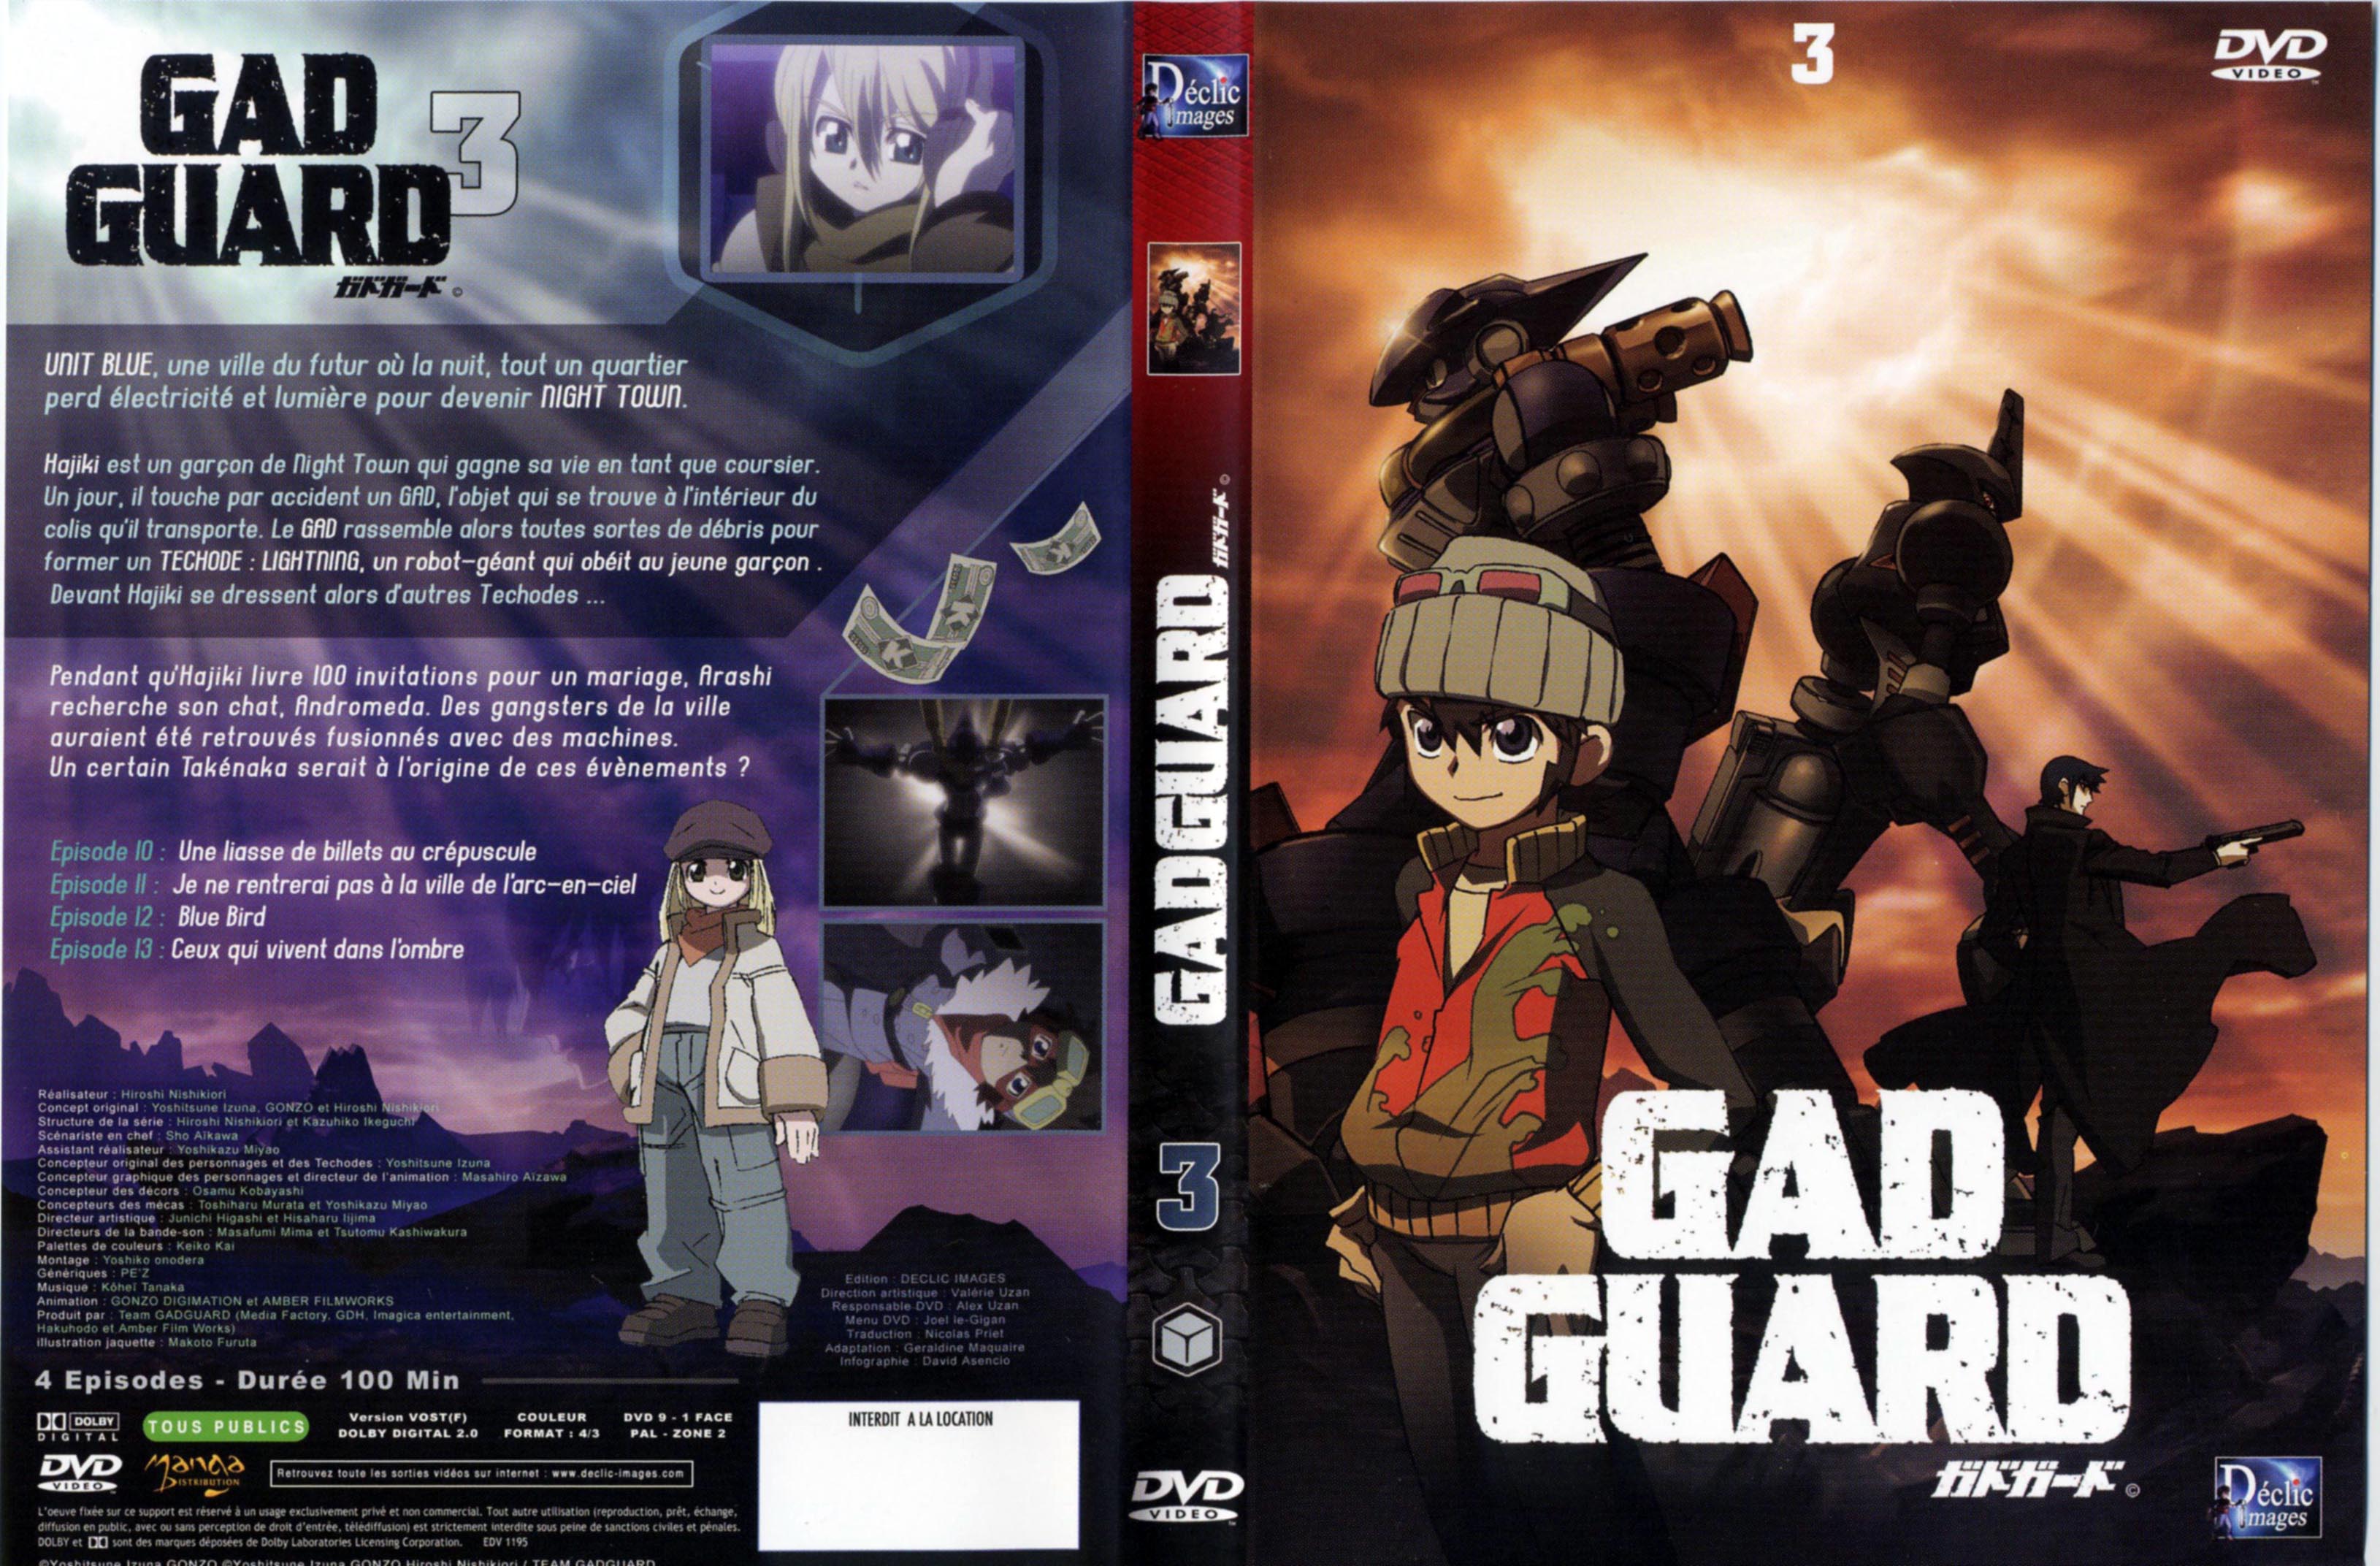 Jaquette DVD Gad Guard DVD 3